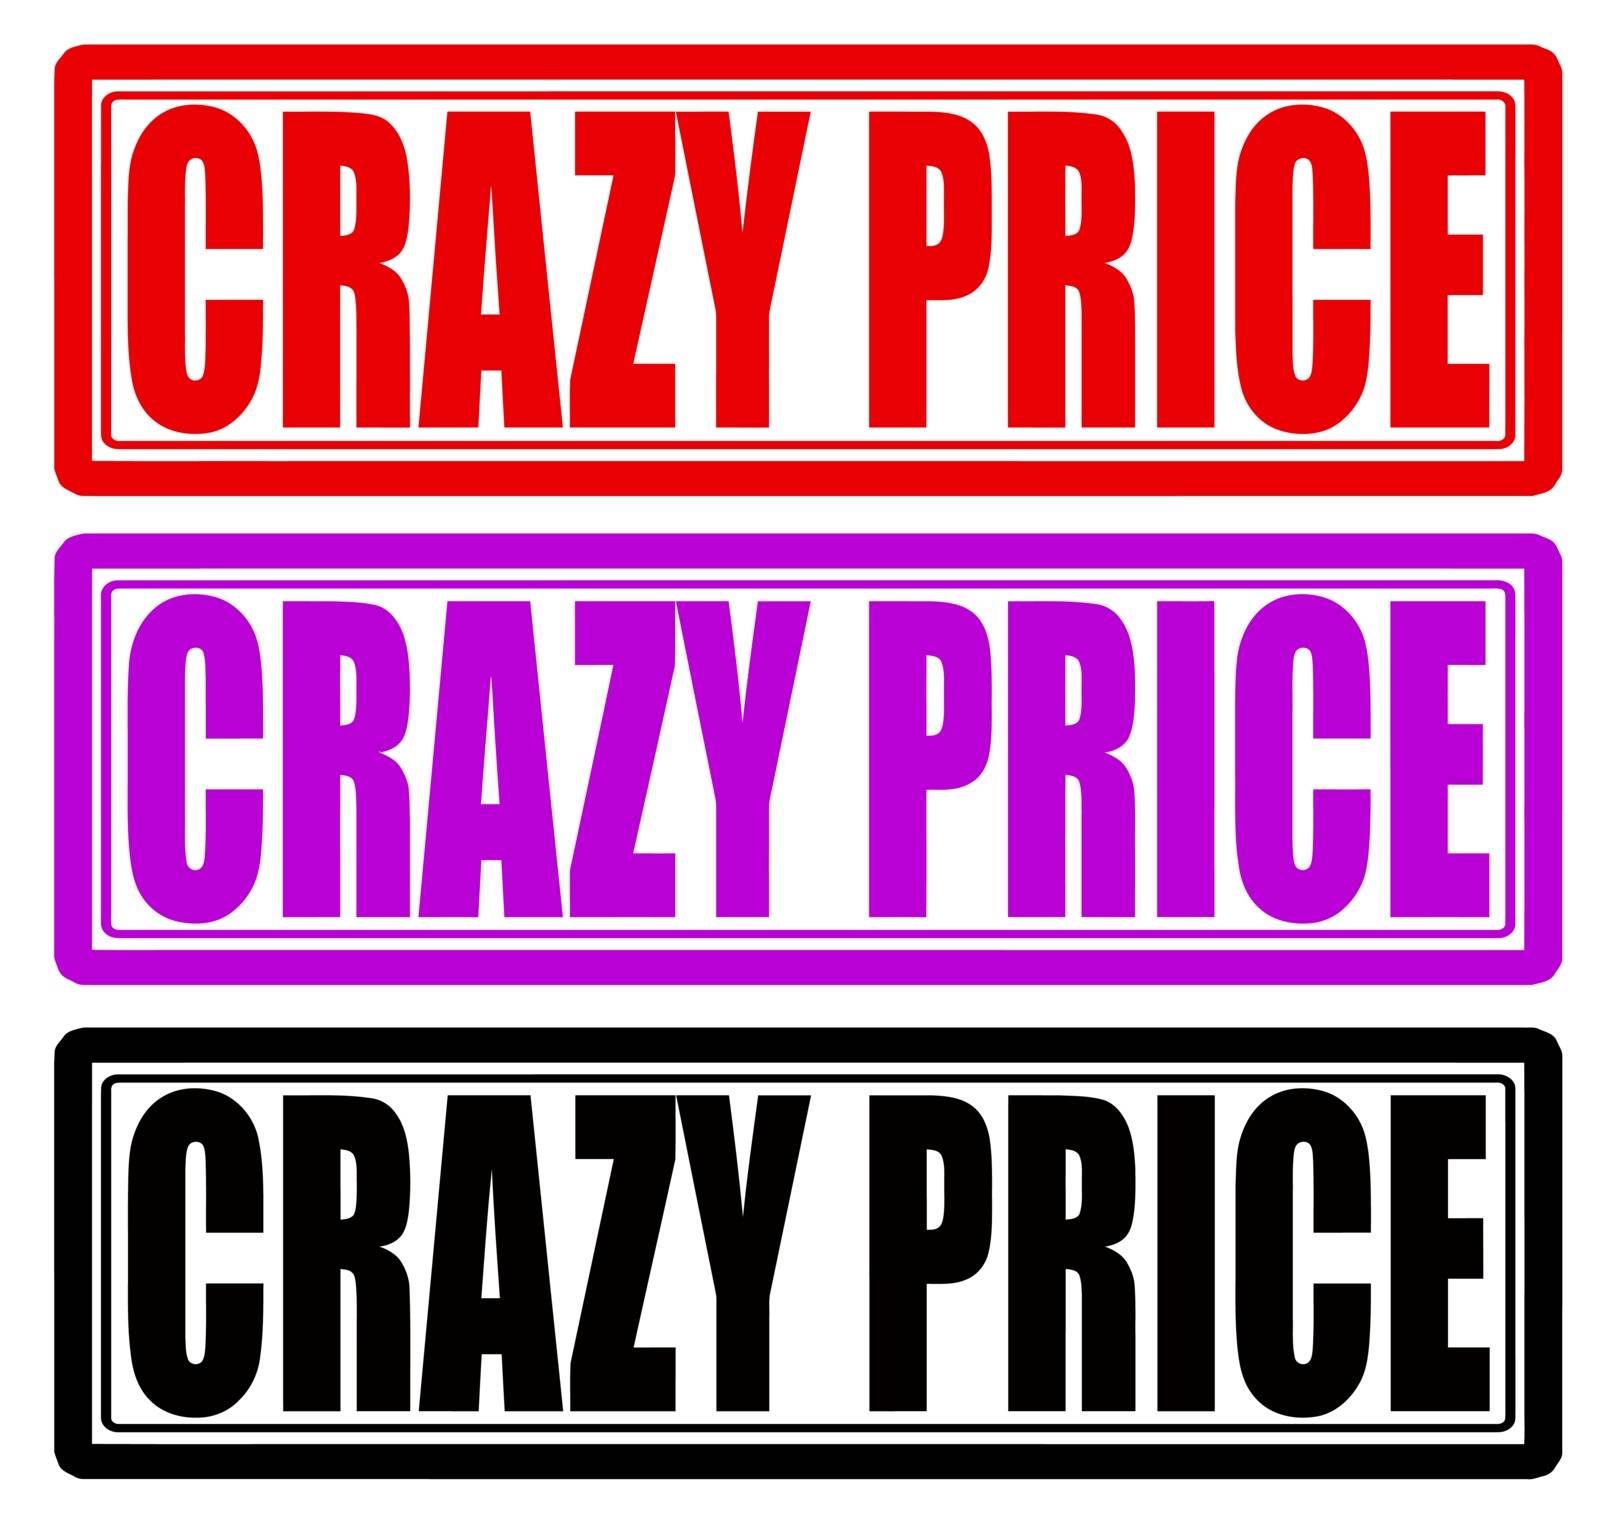 Crazy price by carmenbobo